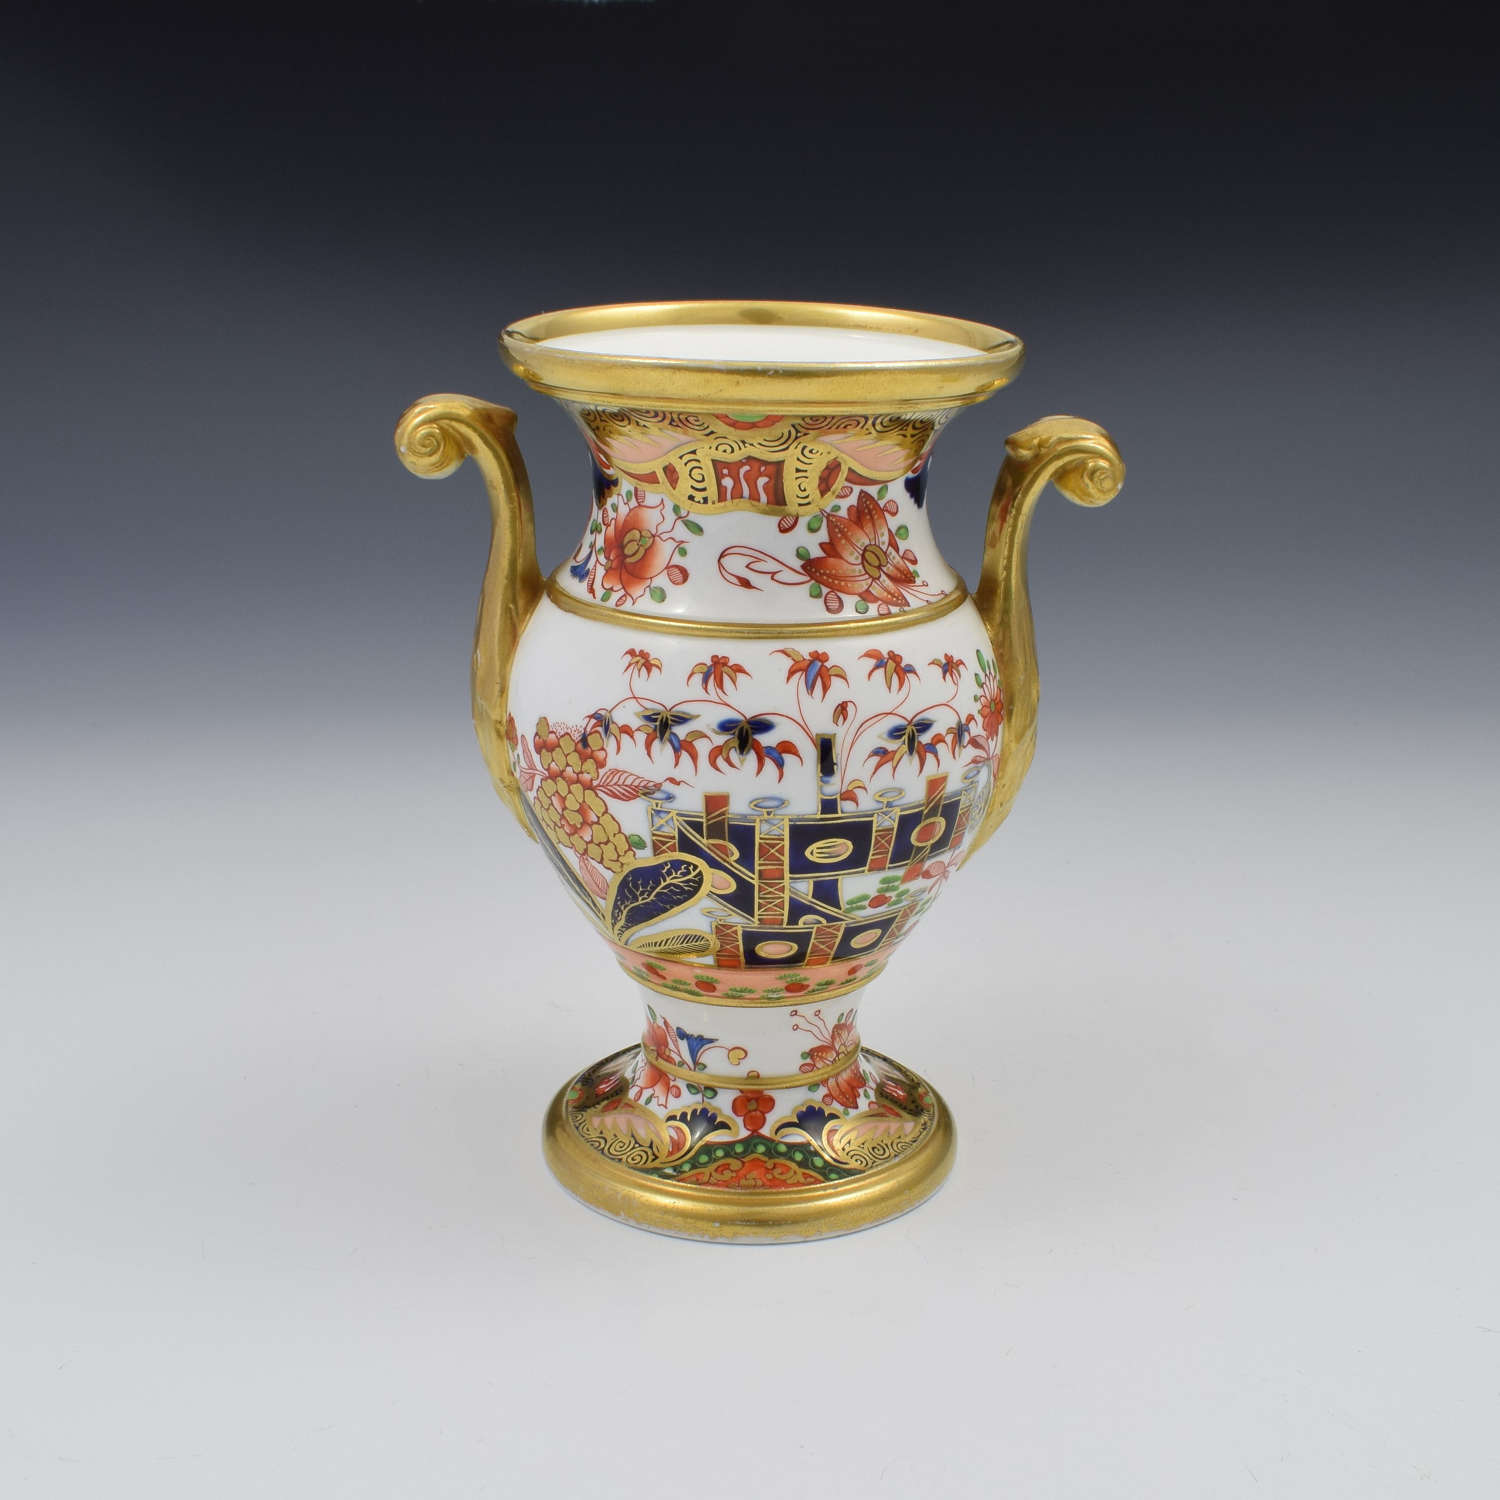 Spode Porcelain Imari Vase Pattern 967 c.1810